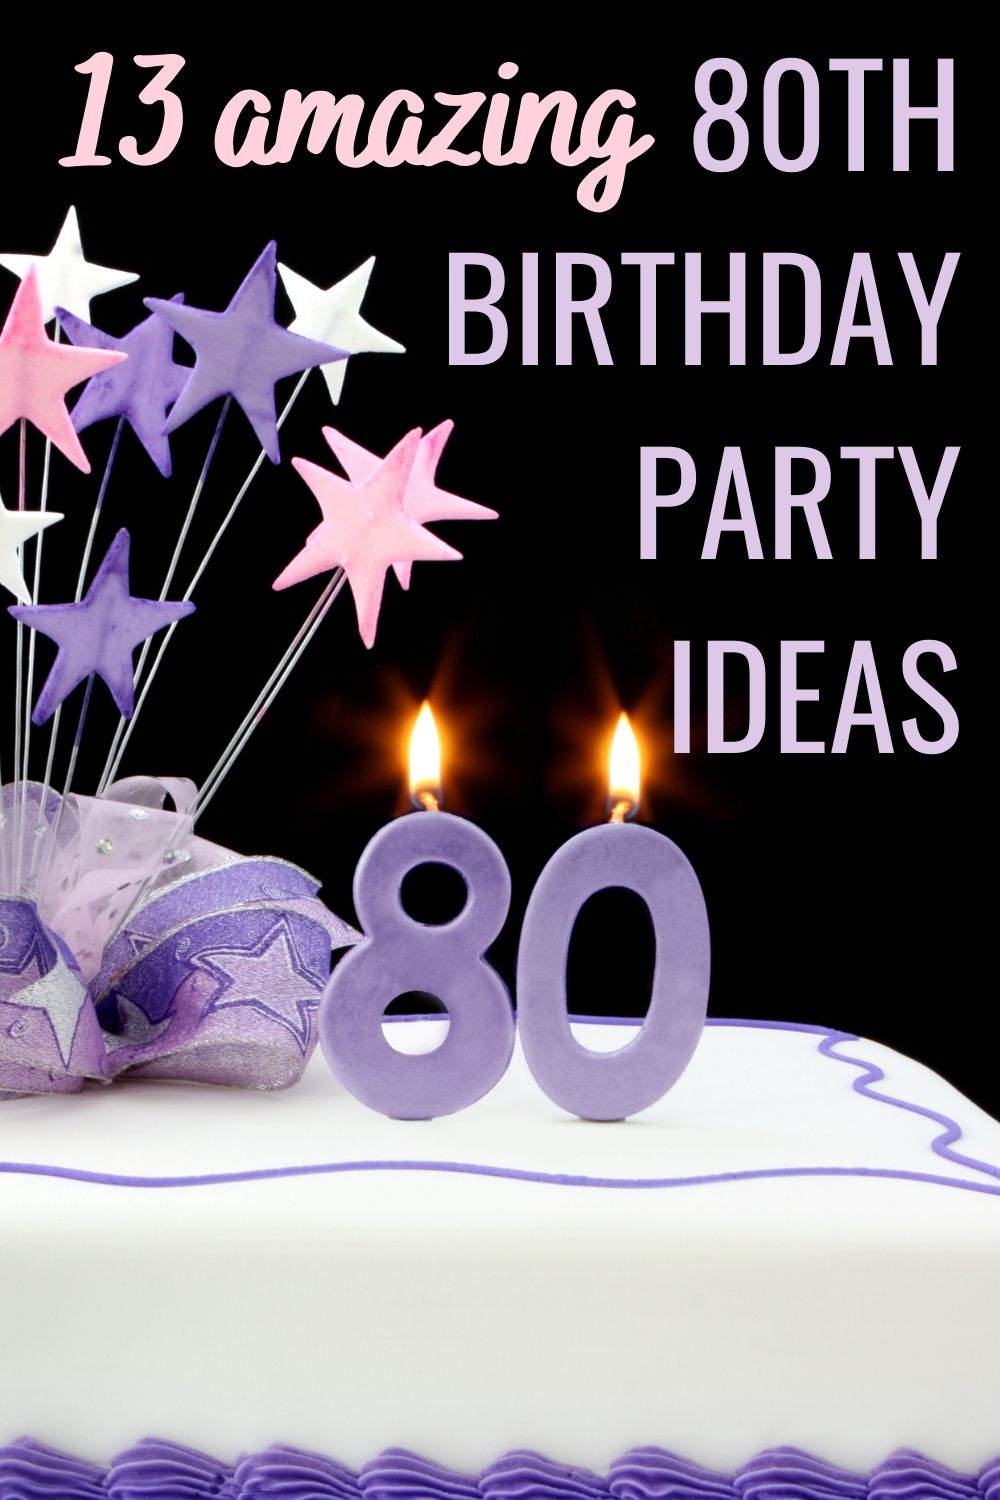 13 amazing 80th birthday party ideas